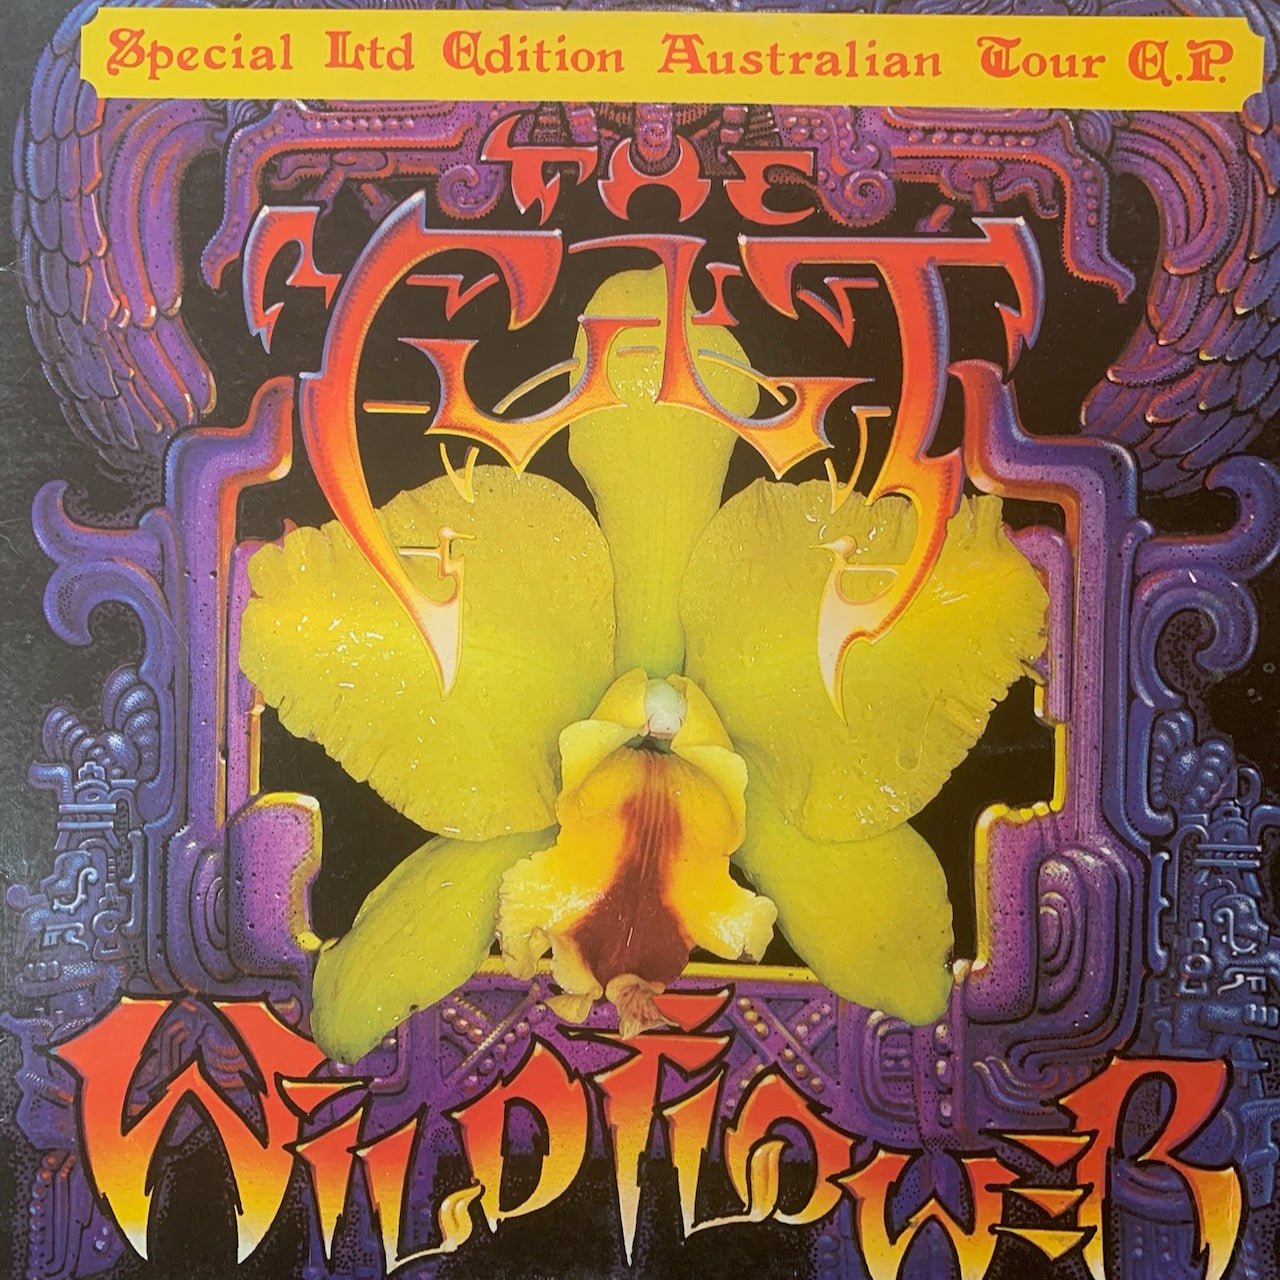 THE CULT - WILDFLOWER (SPECIAL LTD EDITION AUSTRALIAN TOUR E.P.)    VG+/VG+ 1987